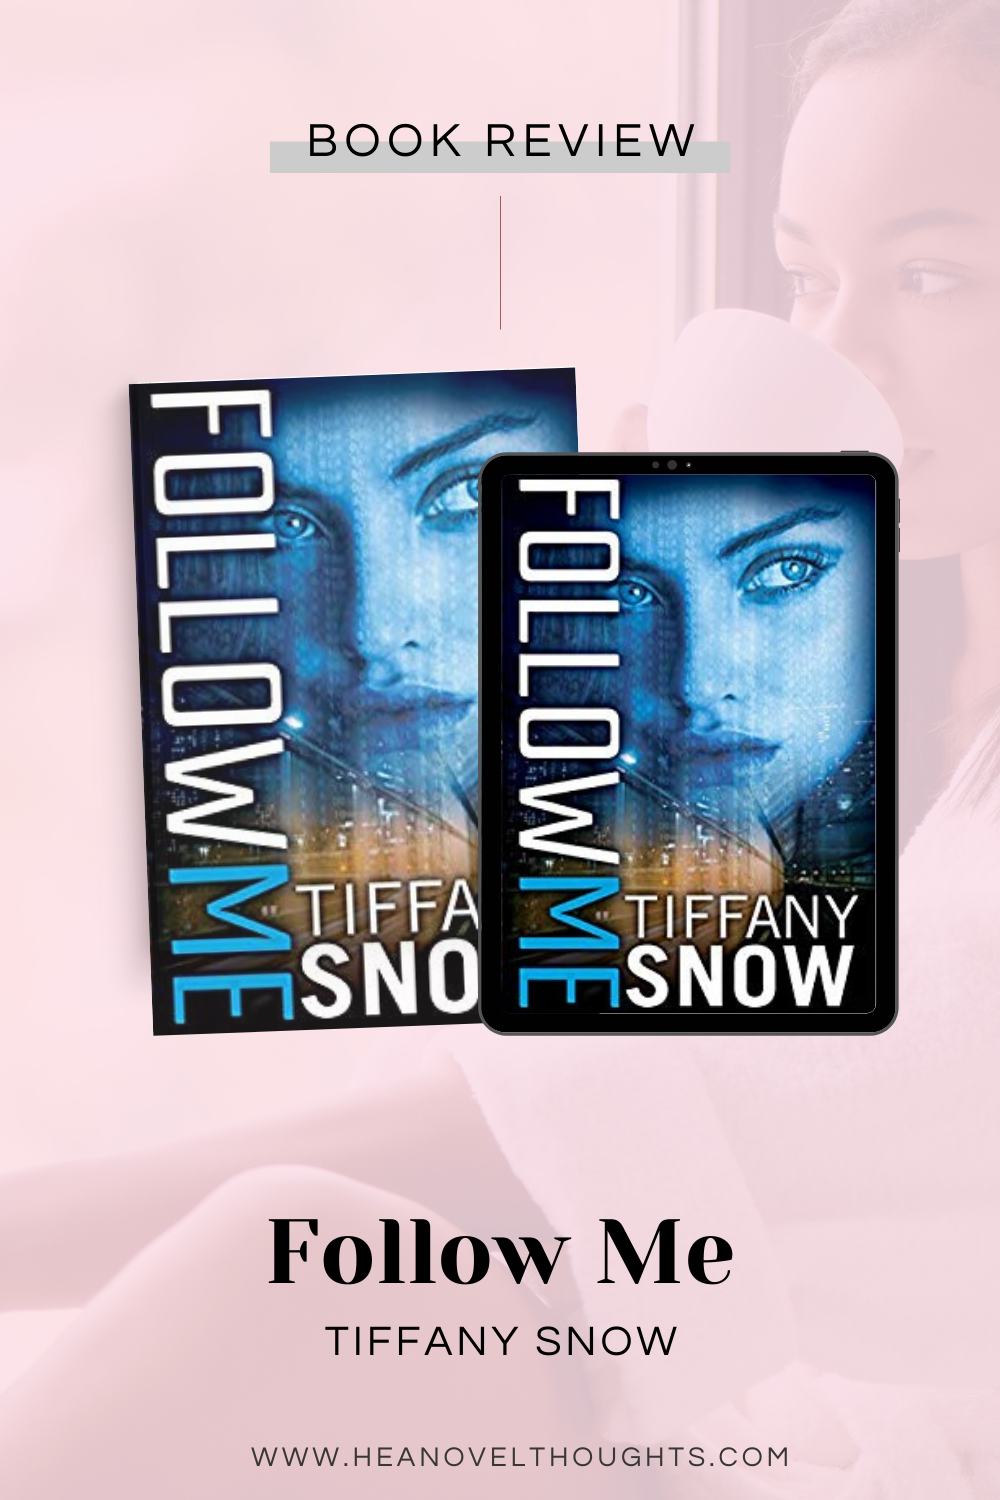 Follow Me by Tiffany Snow